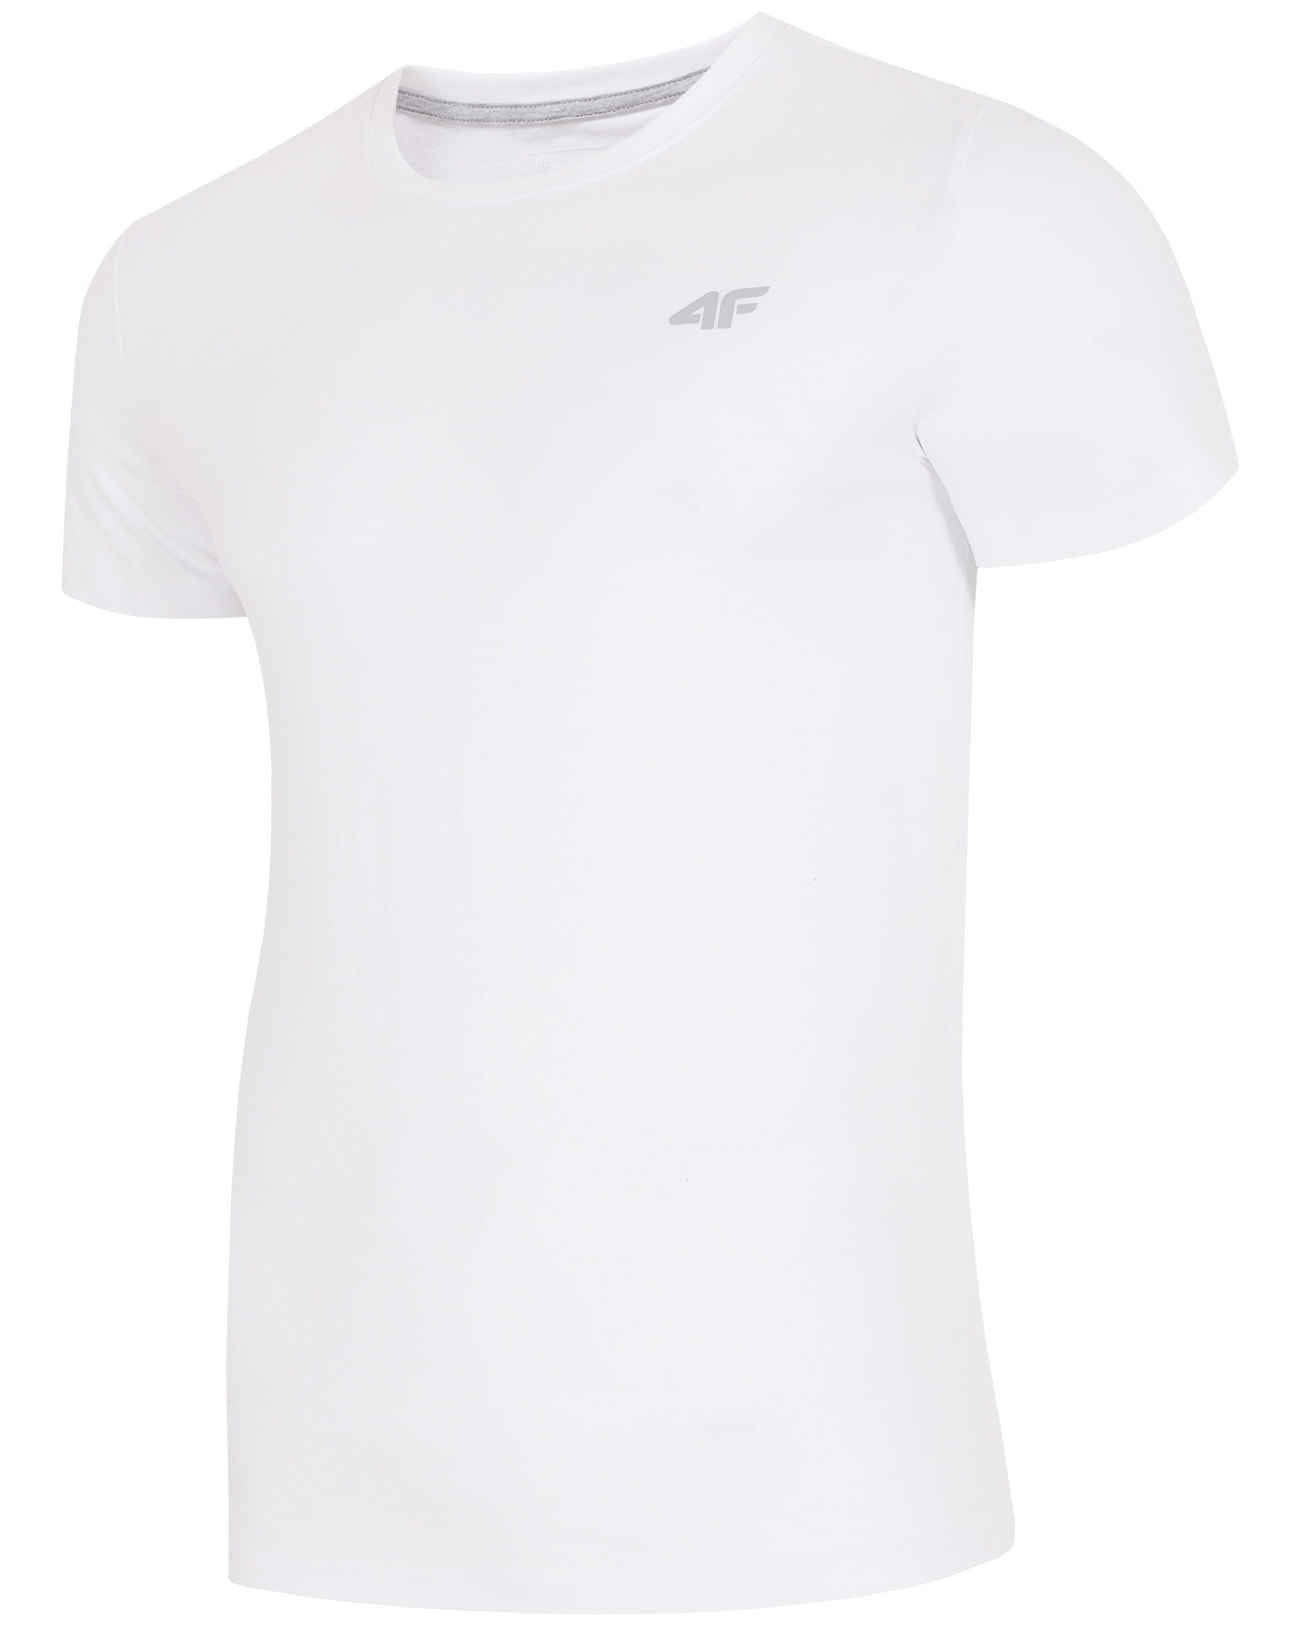 4F Man's T-Shirt - White